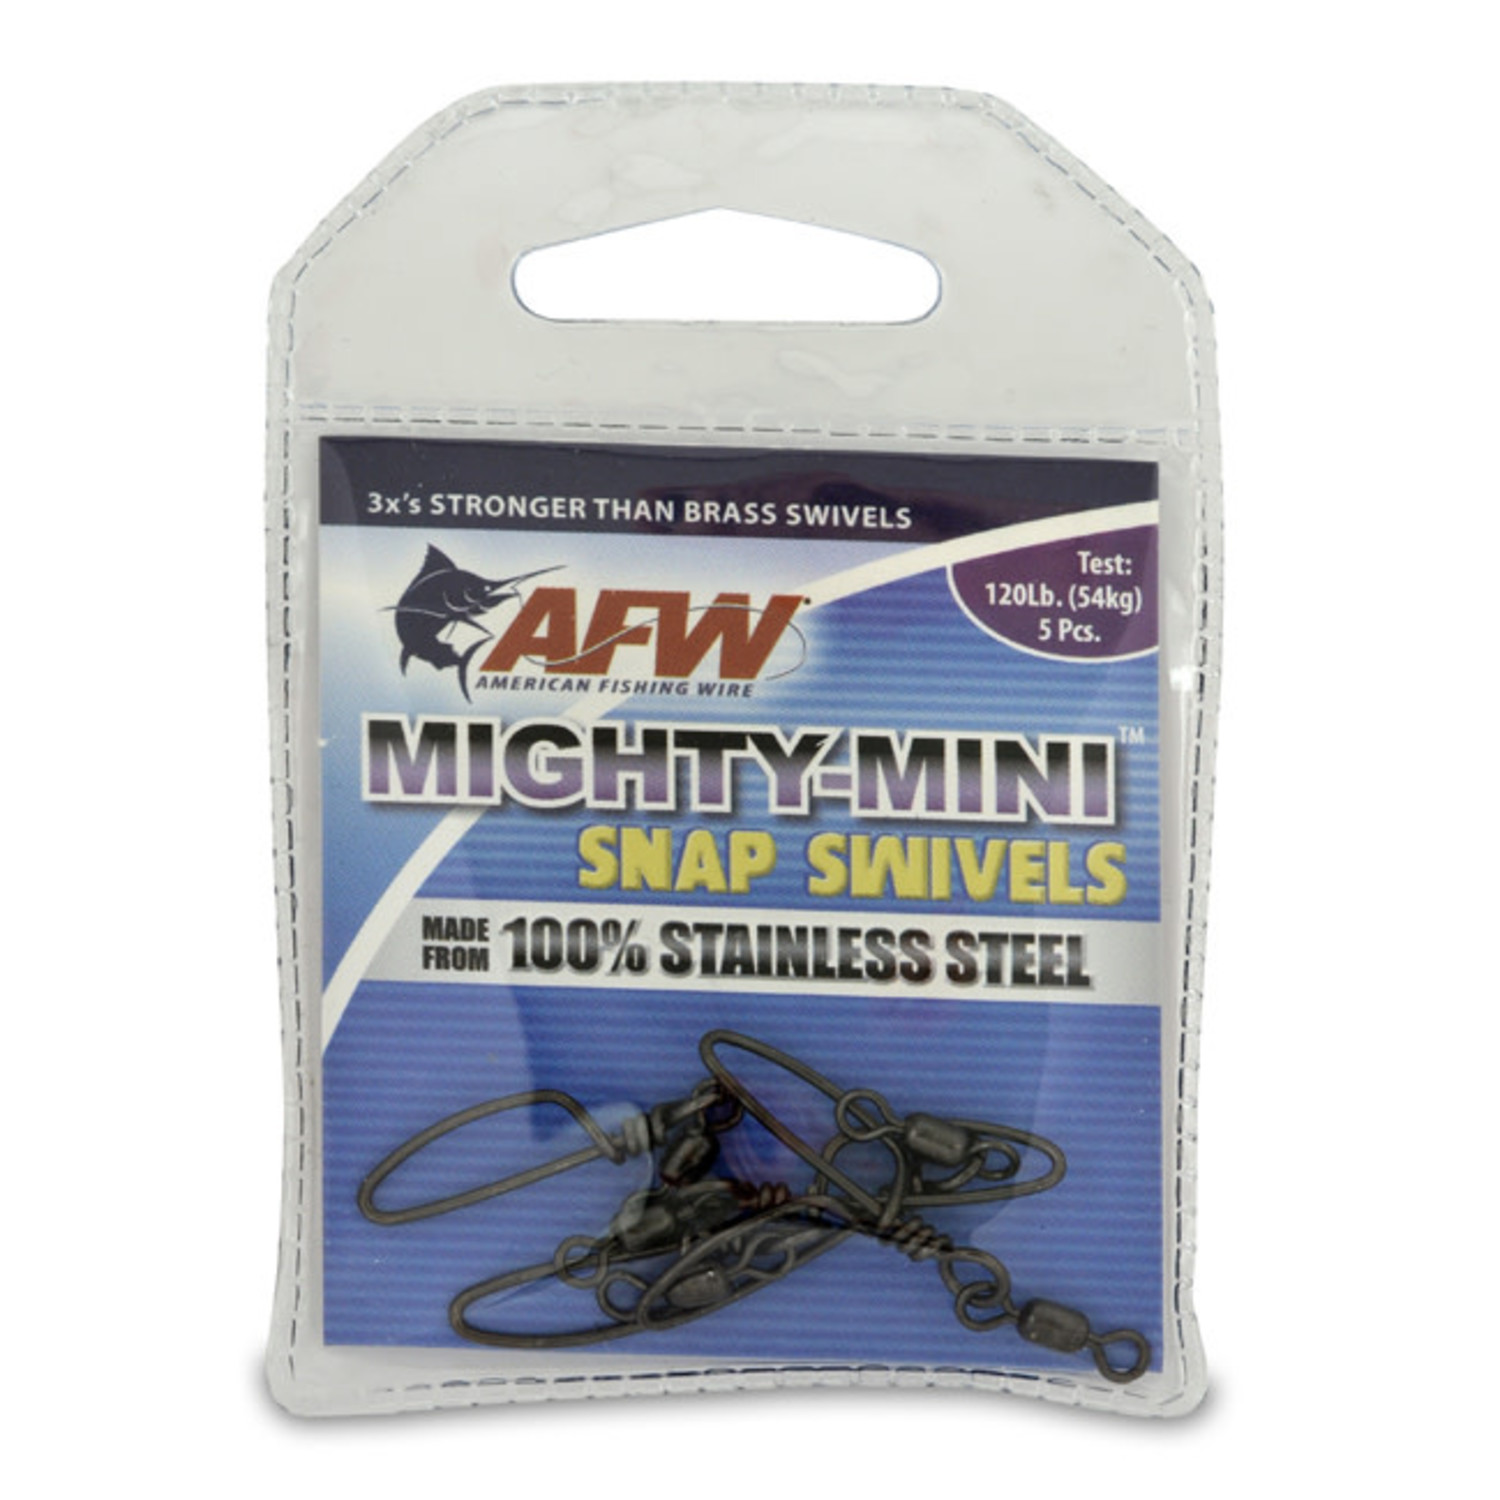 AFW Mighty-Mini Crane Swivels - The Bait Shop Gold Coast